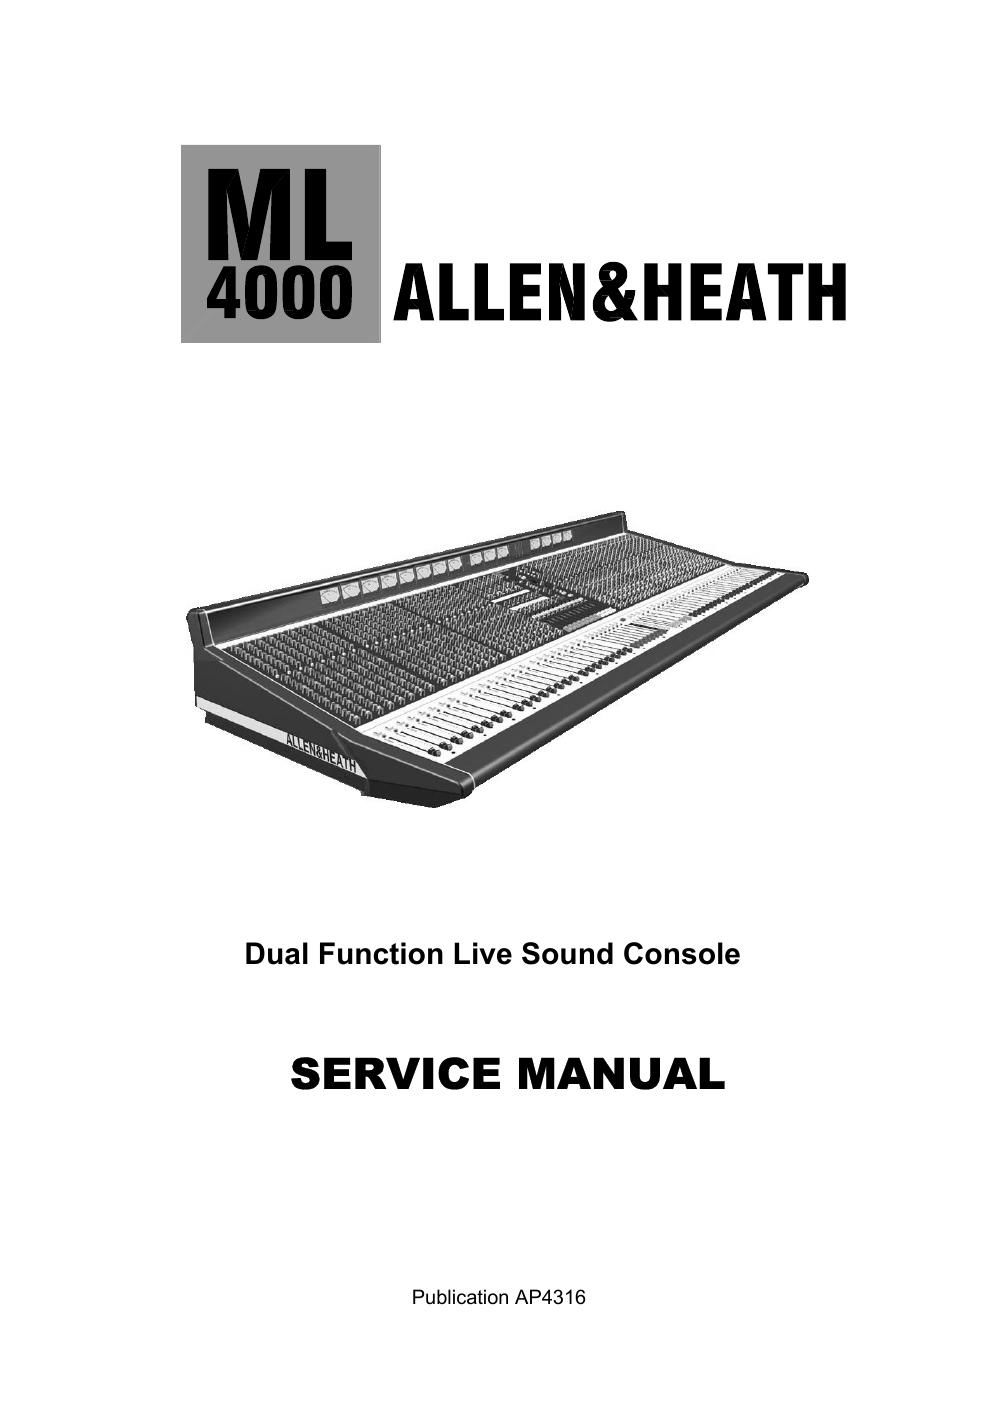 allen heath ml4000 service manual